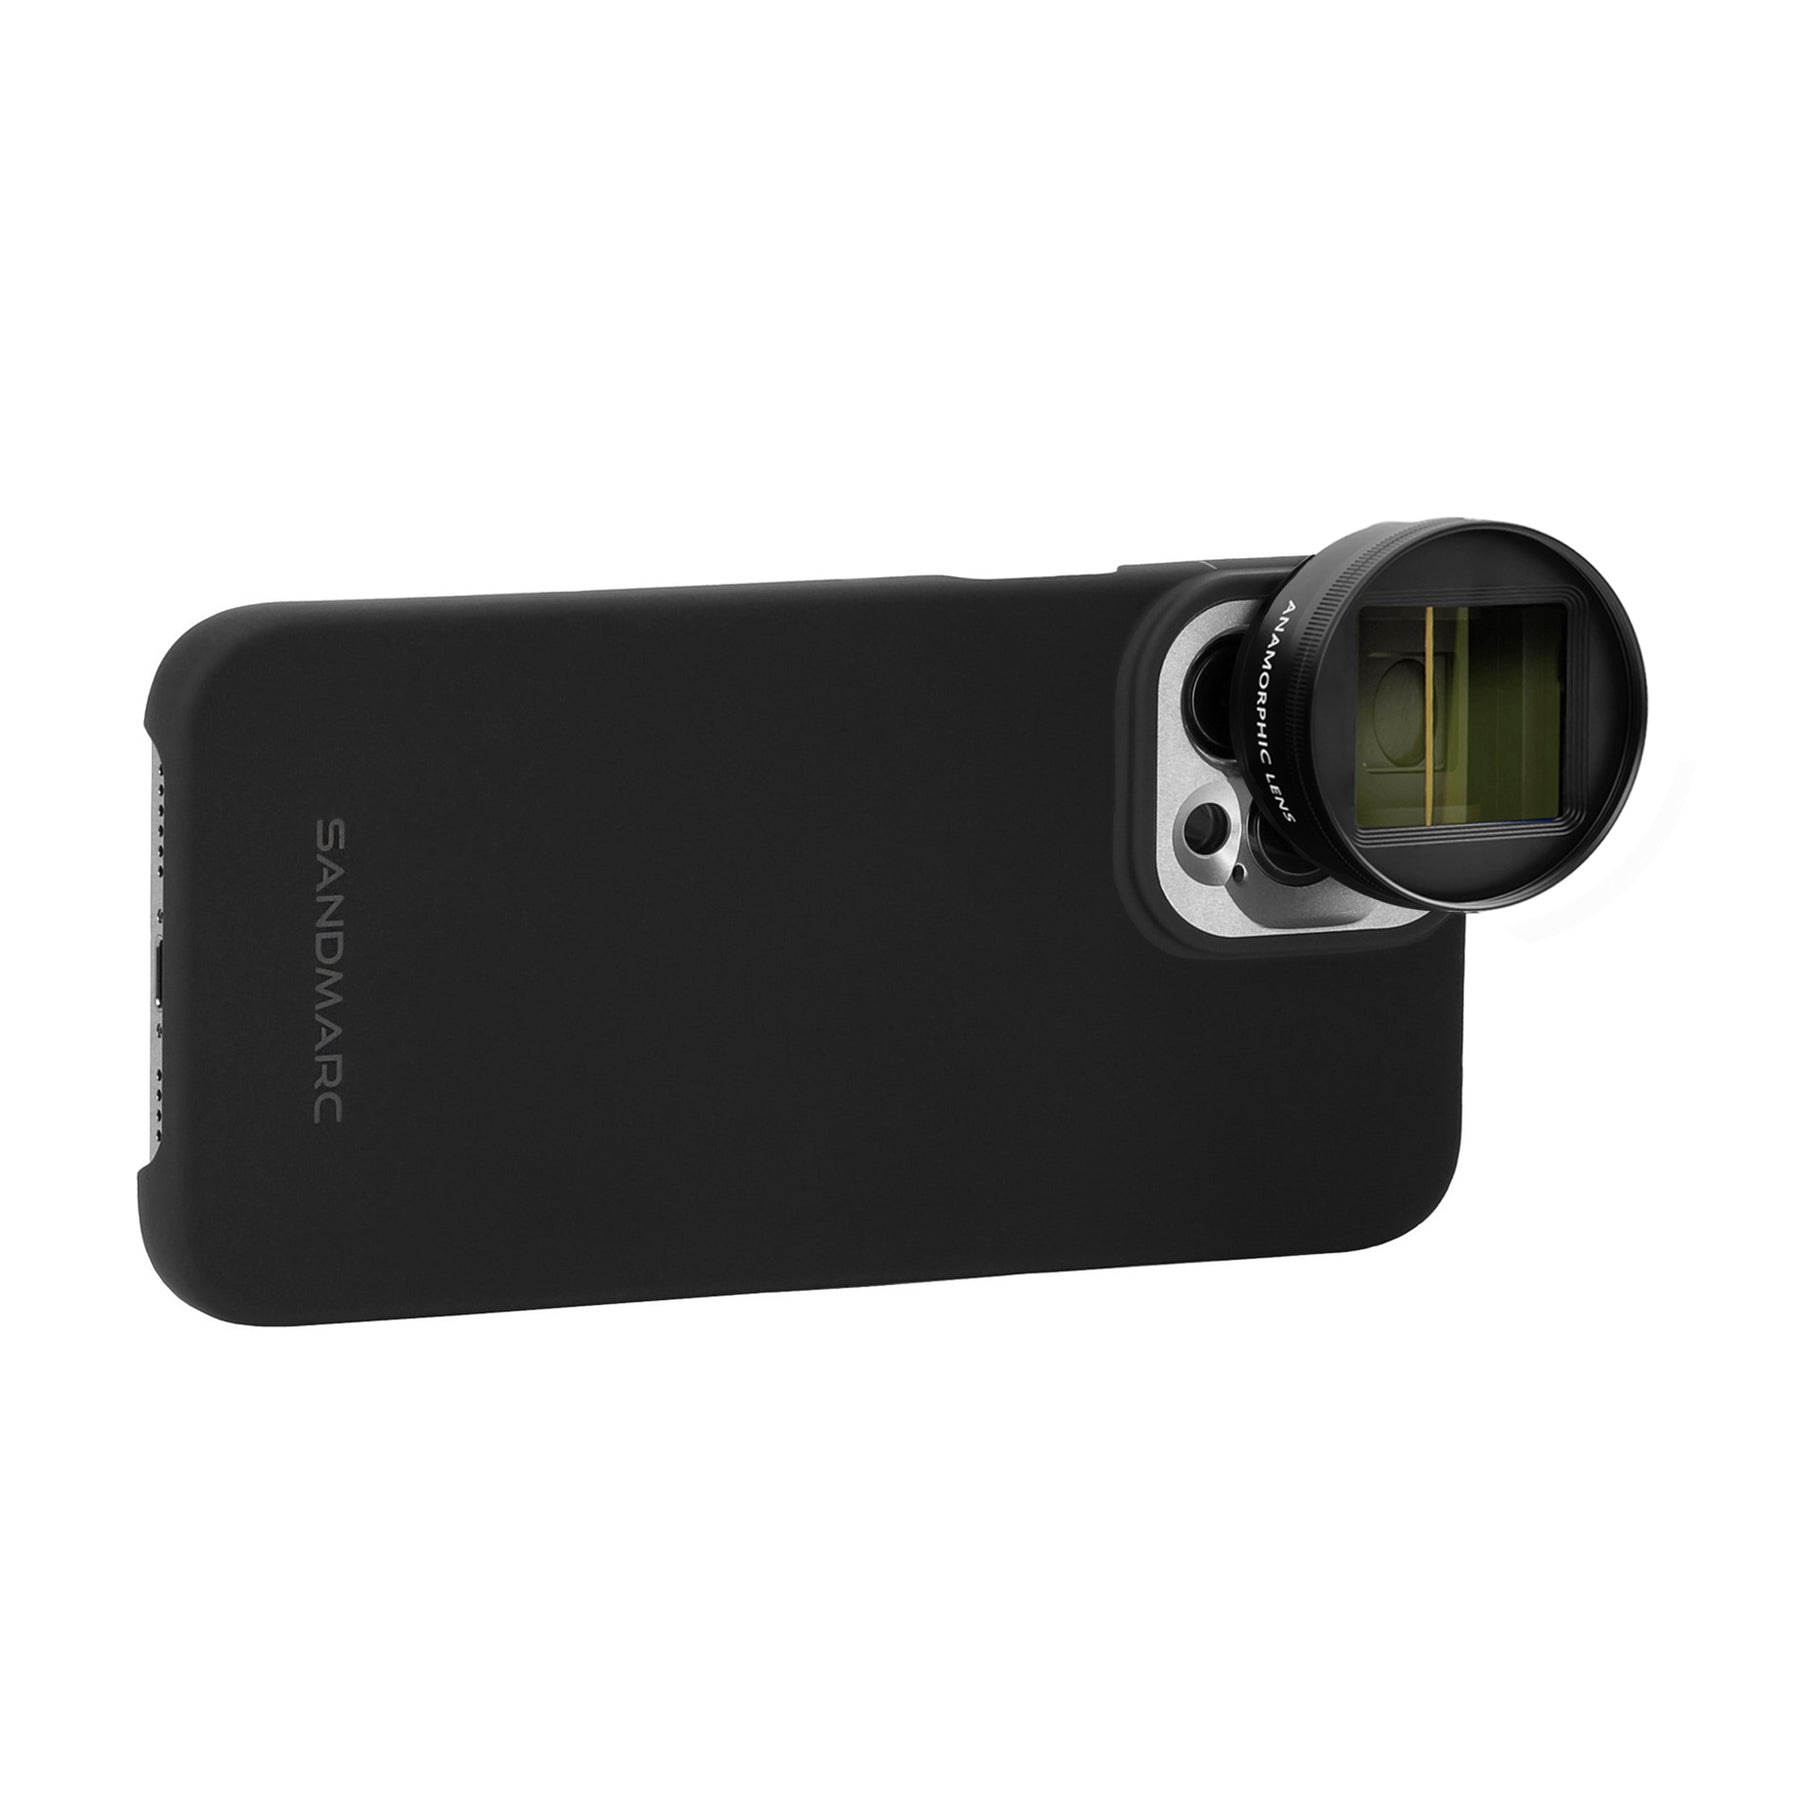 Anamorphic Lens Edition - iPhone 11 Pro